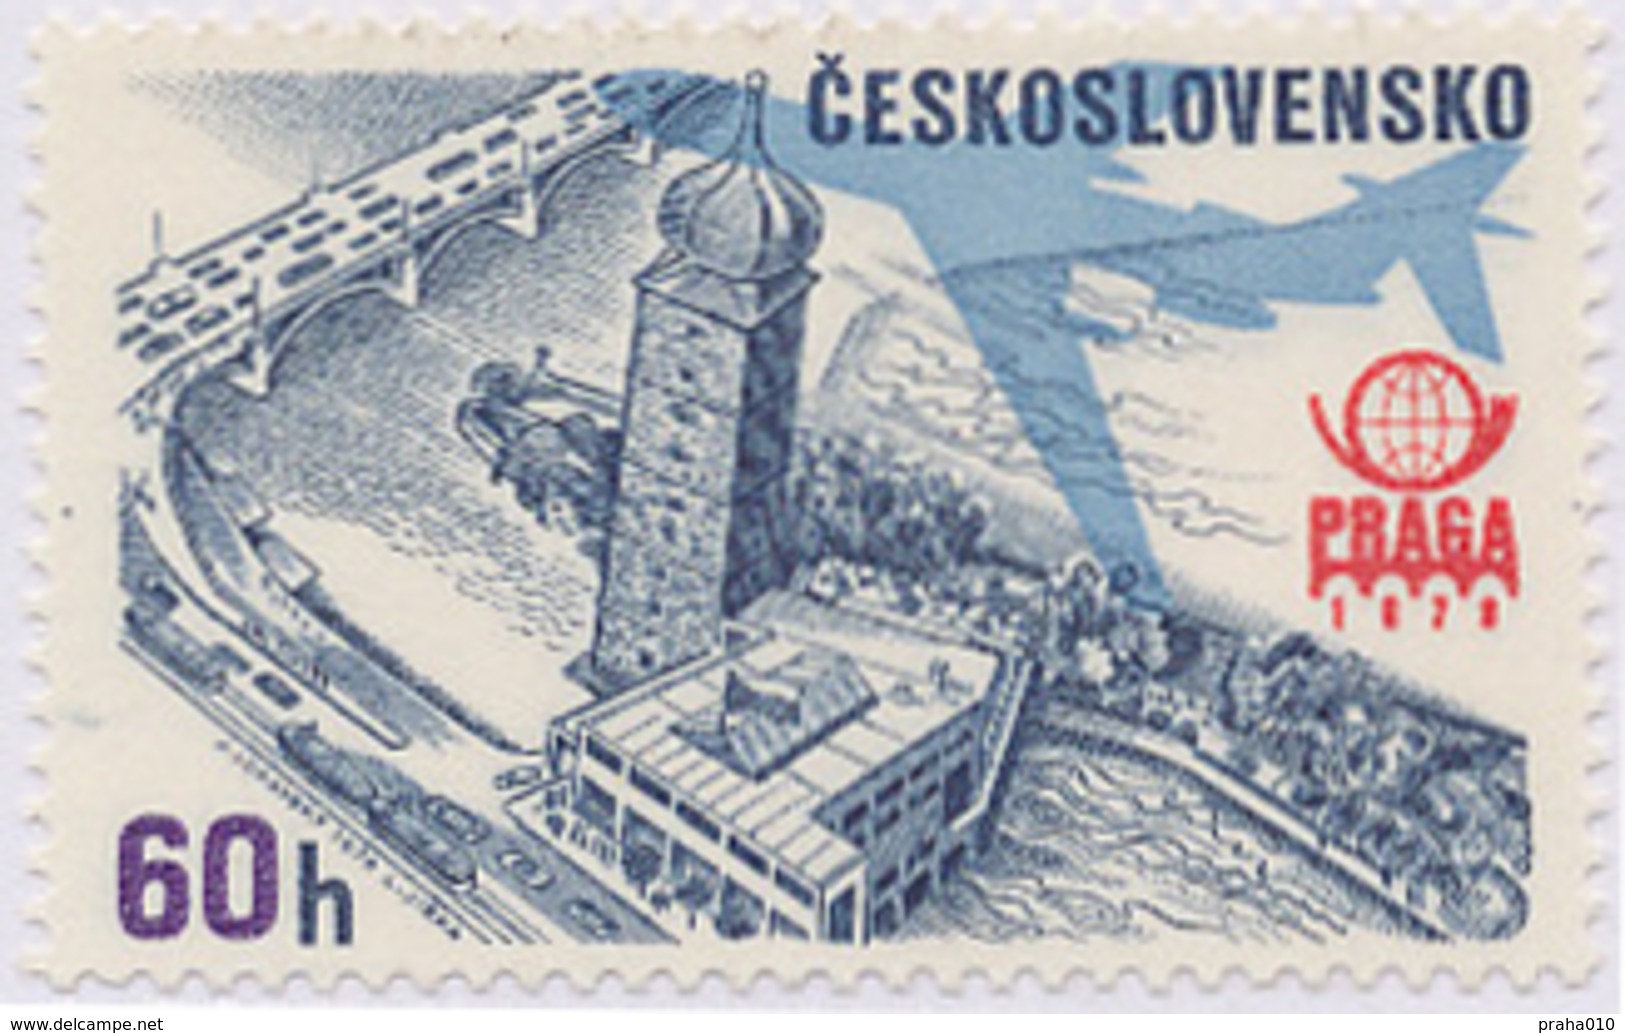 Czechoslovakia / Stamps (1976) L0080 (Air Mail Stamp): PRAGA 78 (Prague, Building "Manes"); Painter: J. Lukavsky - Islands